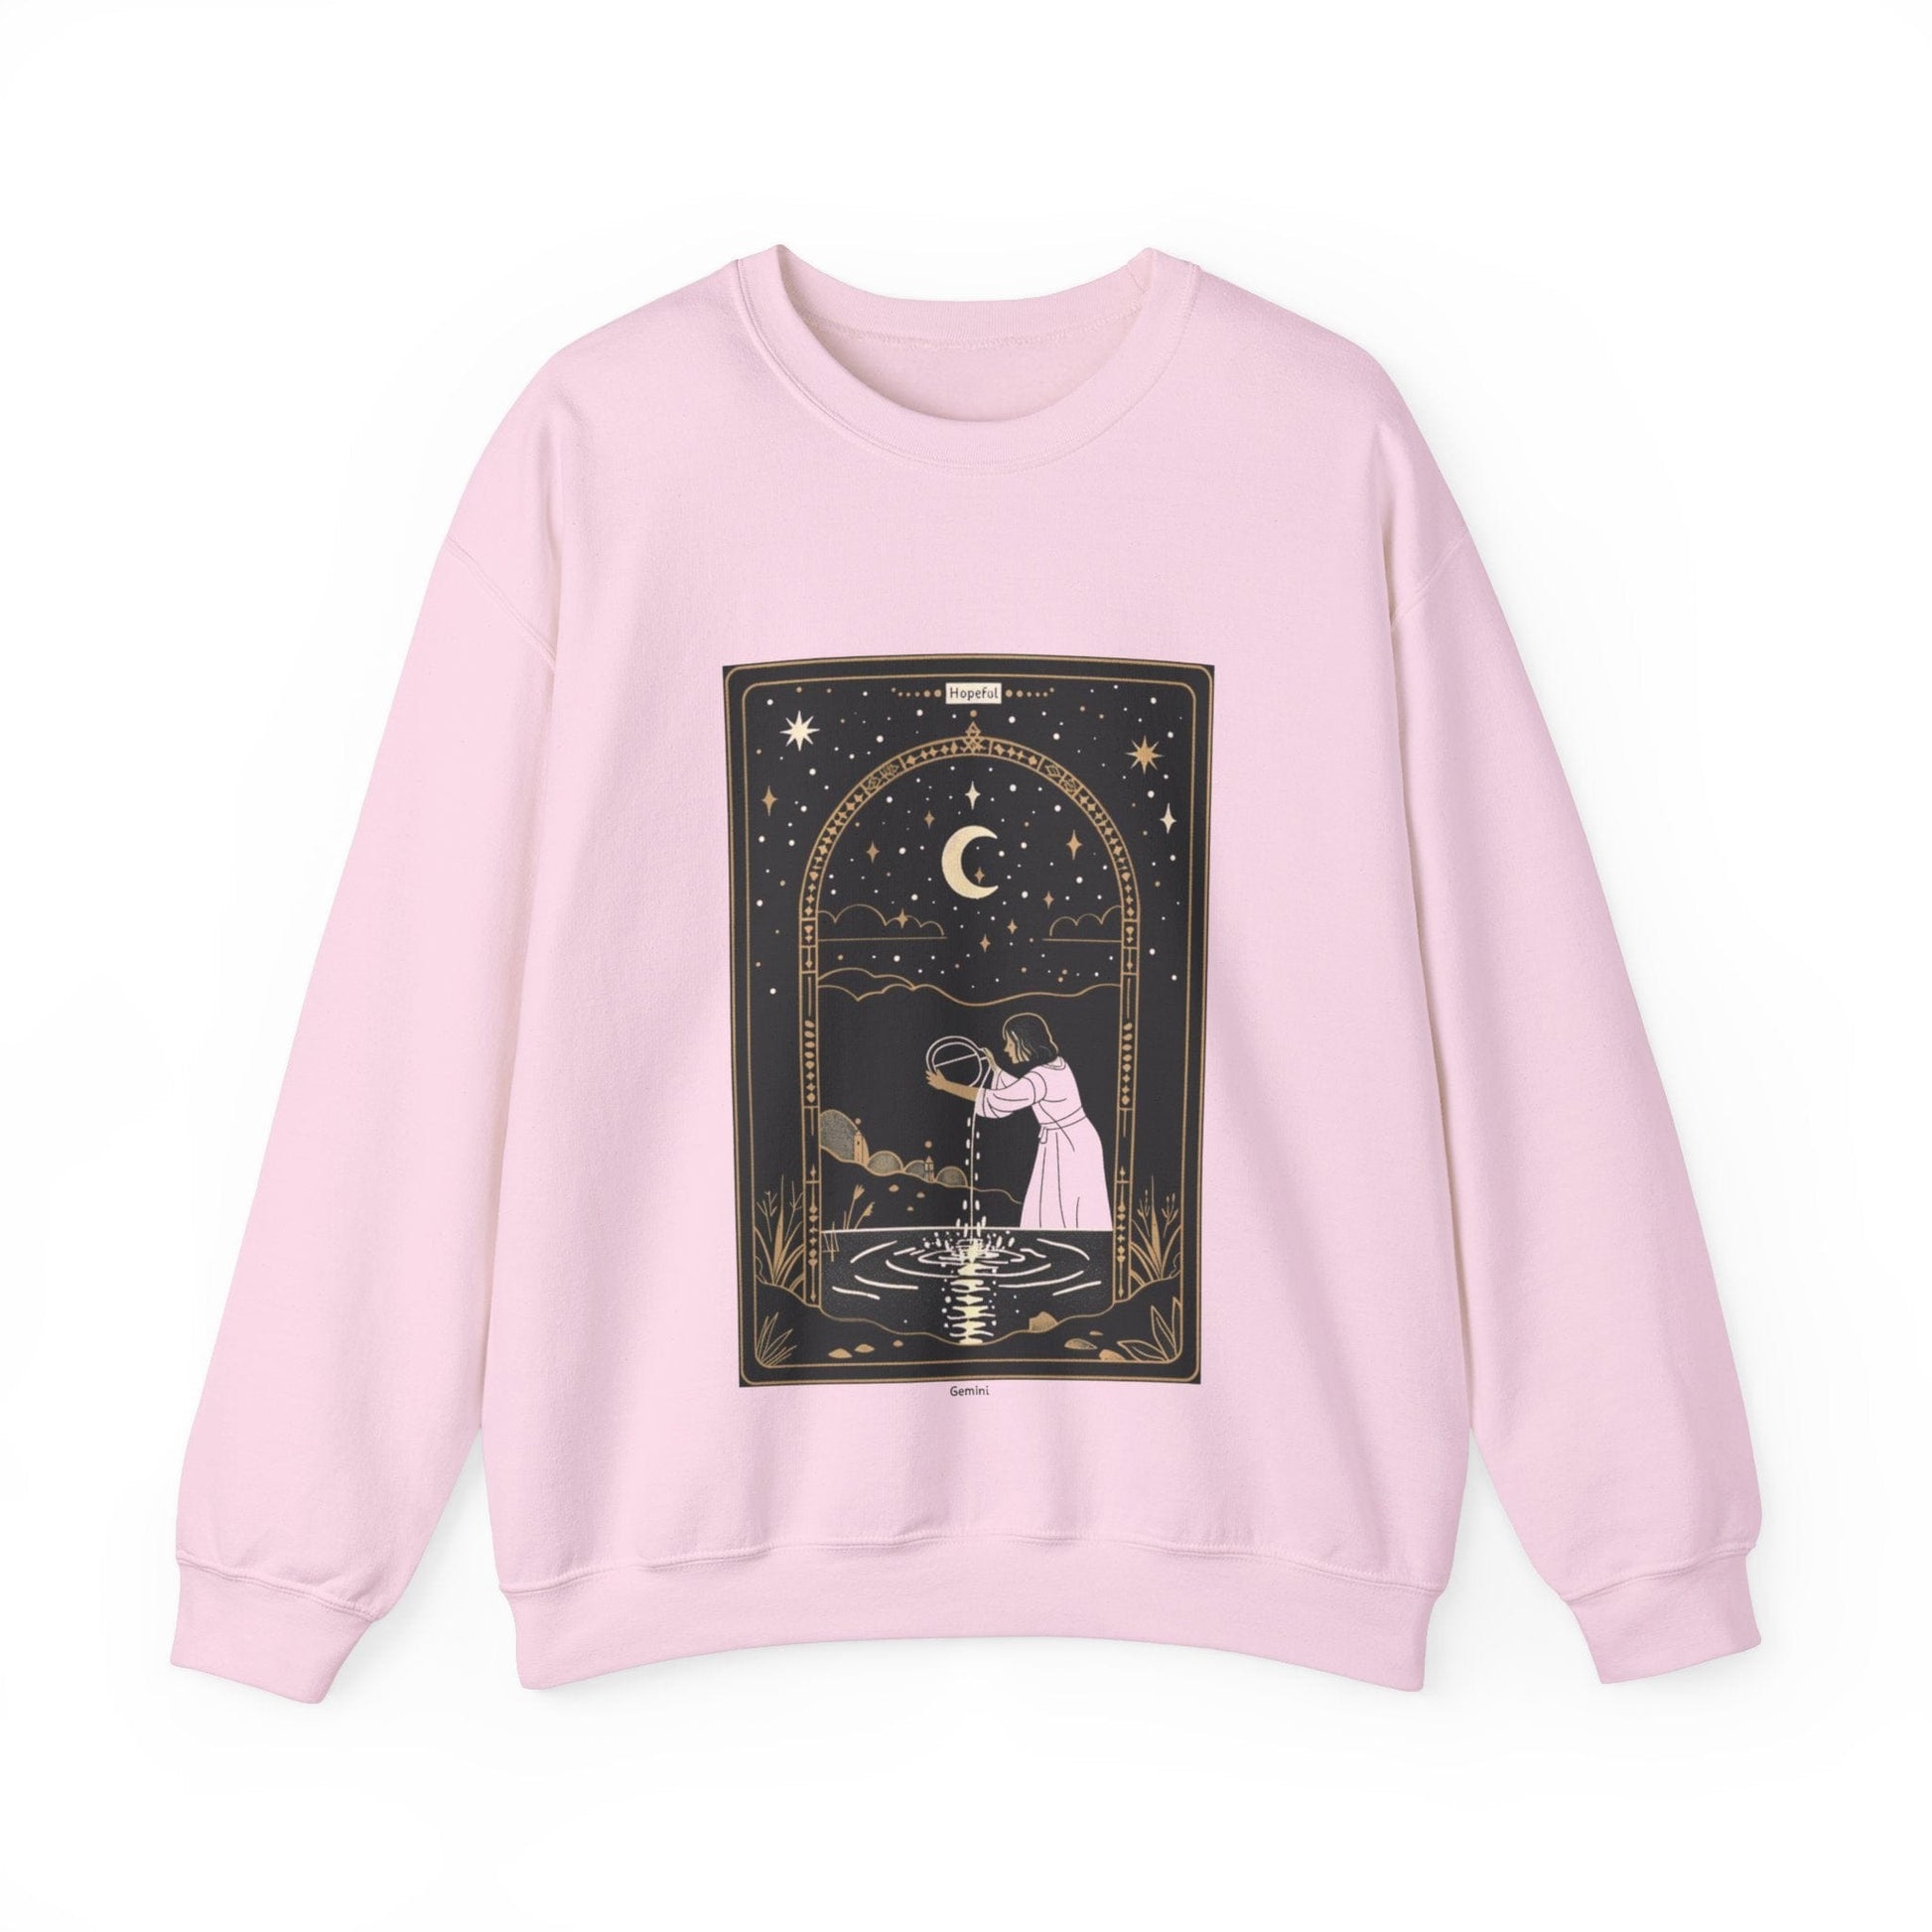 Sweatshirt S / Light Pink Hopeful Gemini Sweater